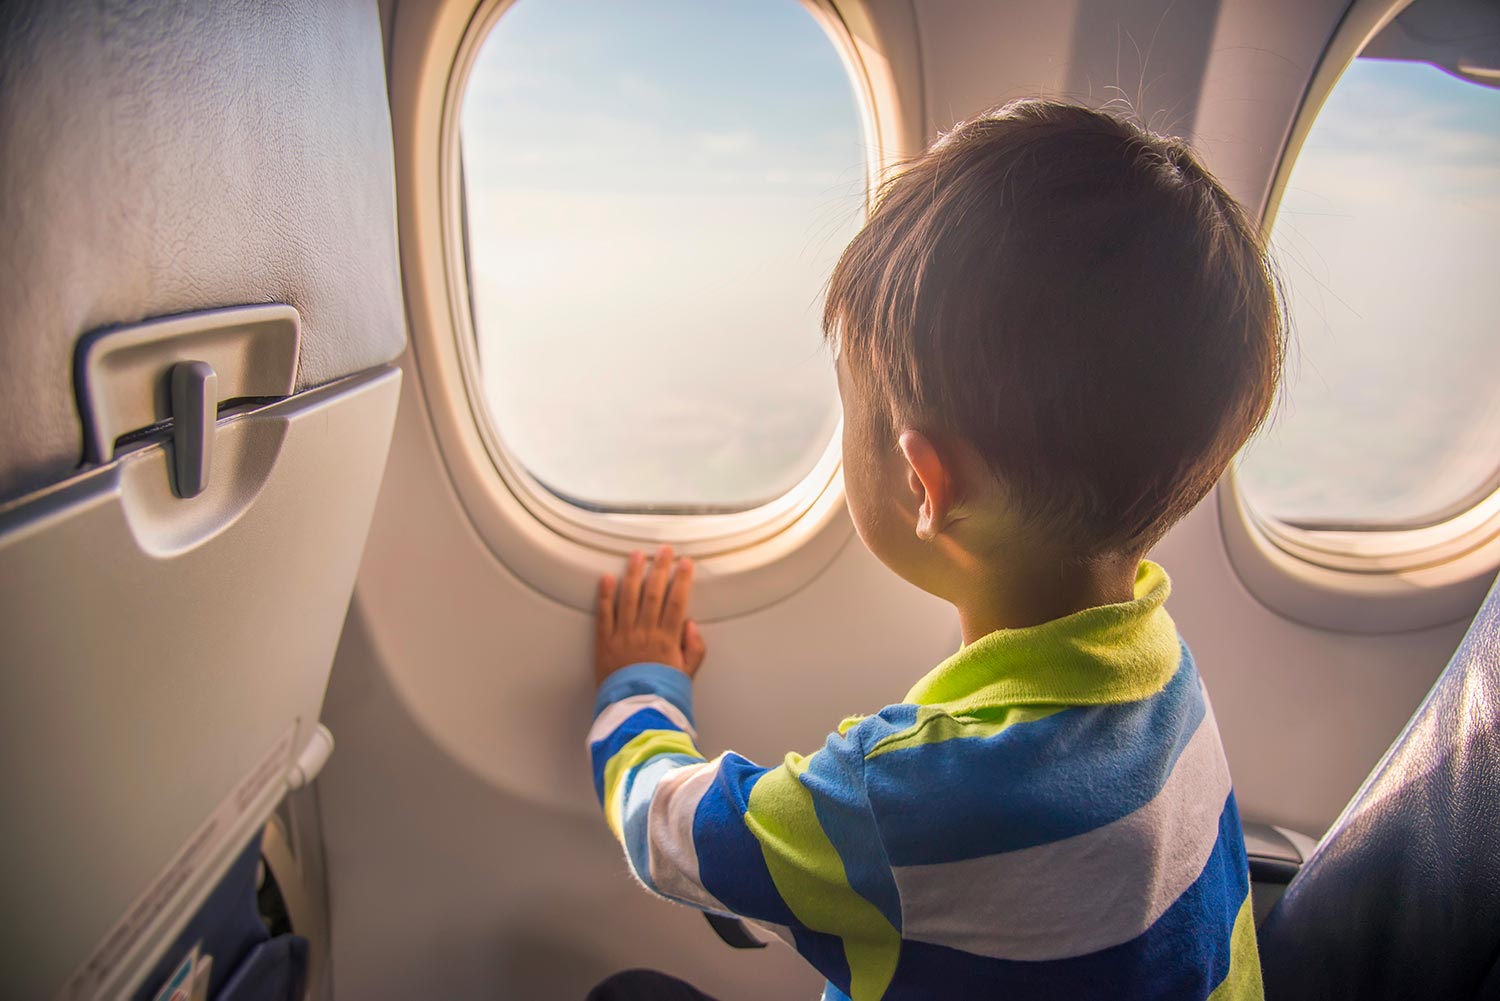 aerei per adulti, voli per soli adulti, aerei child free